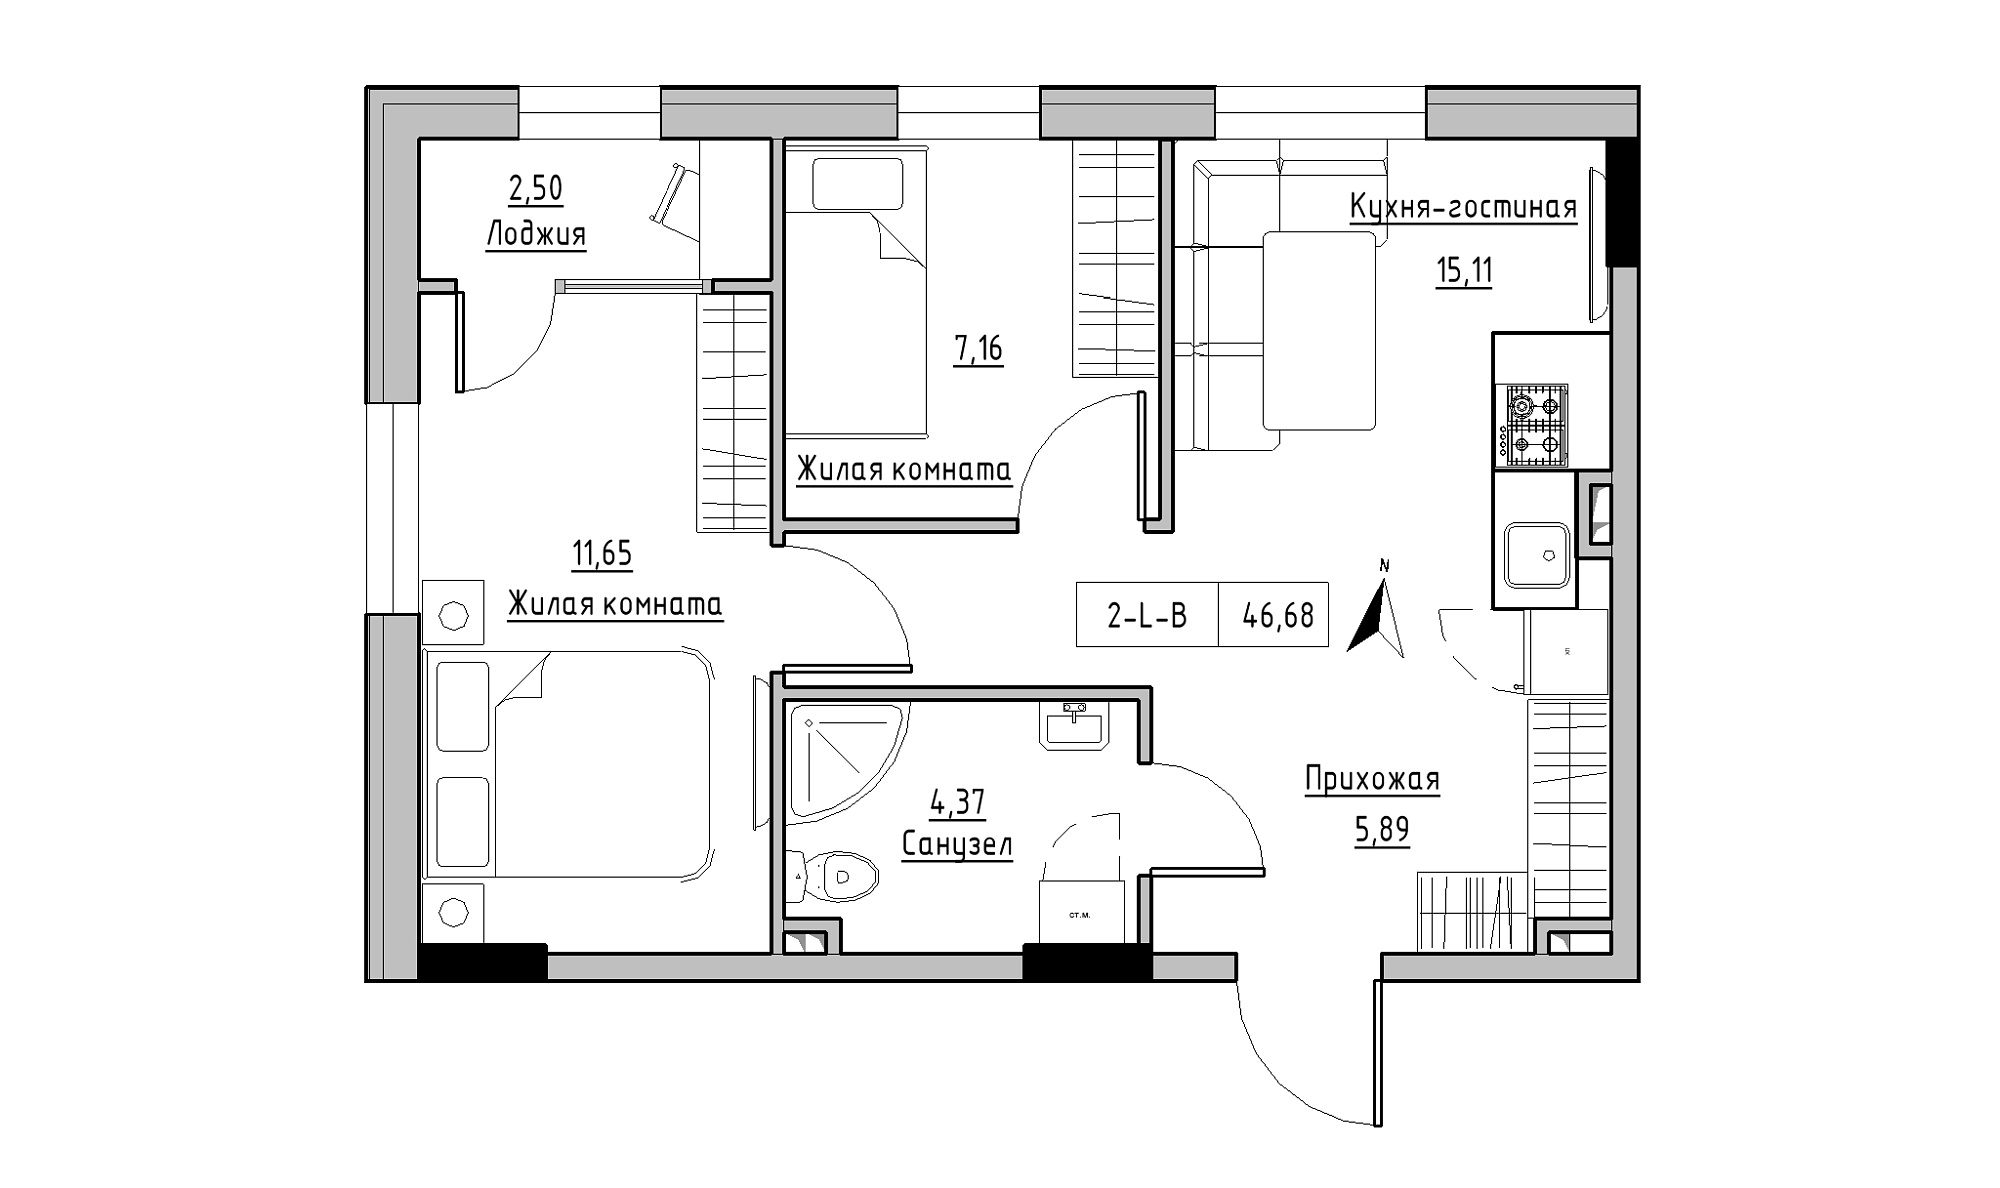 Planning 2-rm flats area 46.68m2, KS-025-01/0006.